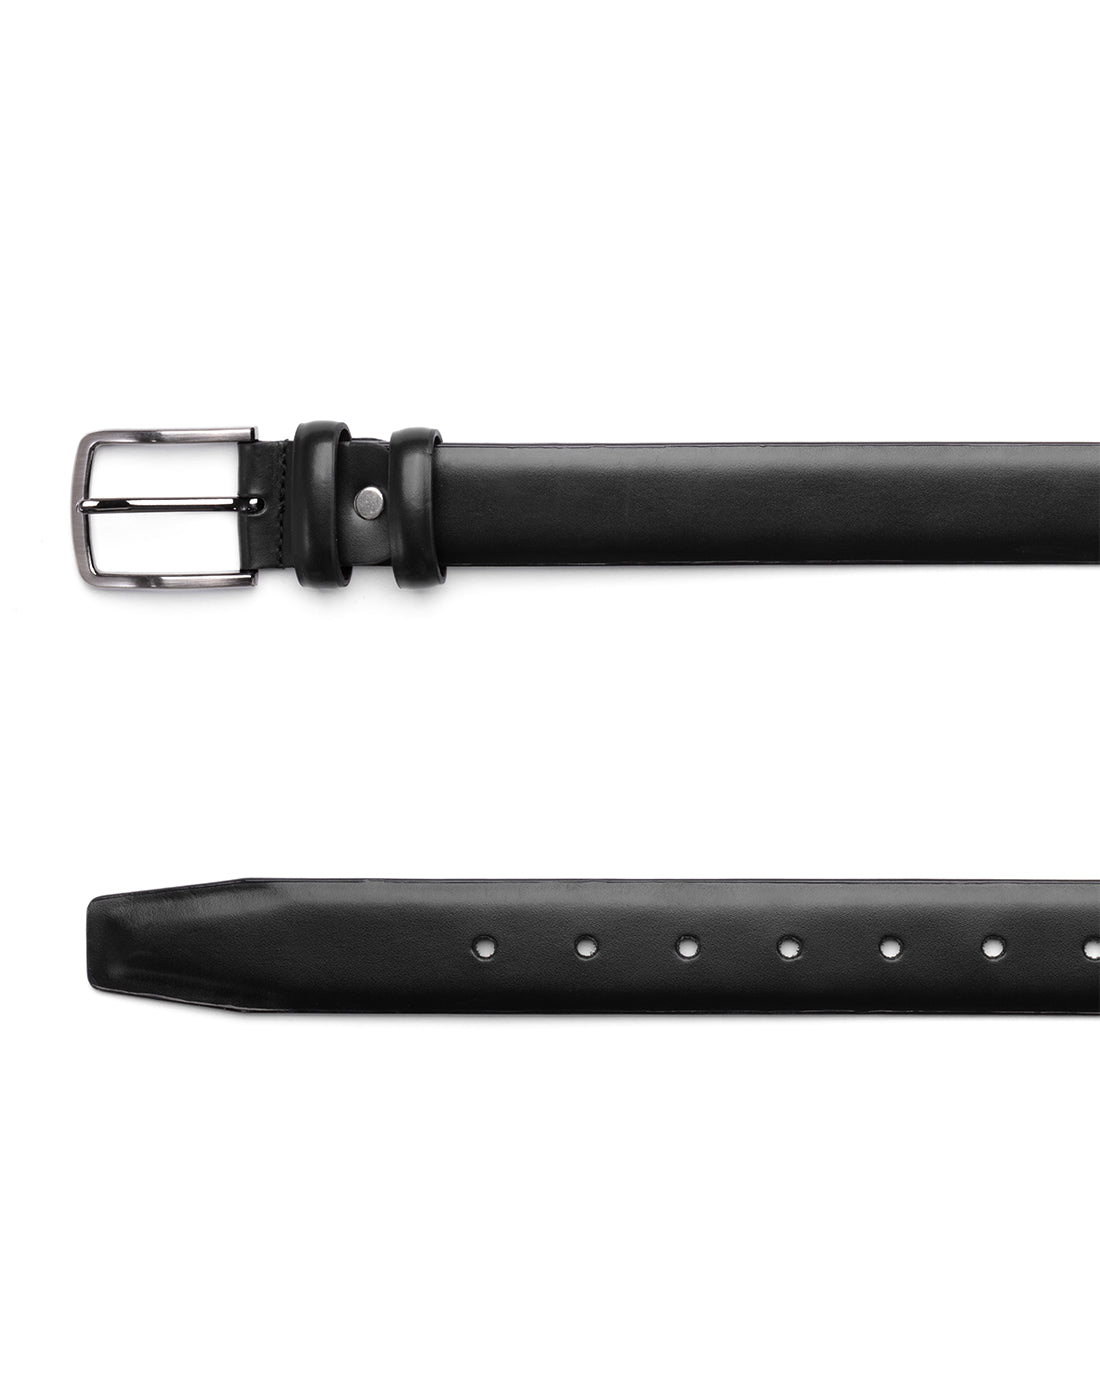 Wide Men's Belt Adjustable Metal Buckle Black Faux Leather GIOSAL-A2112A